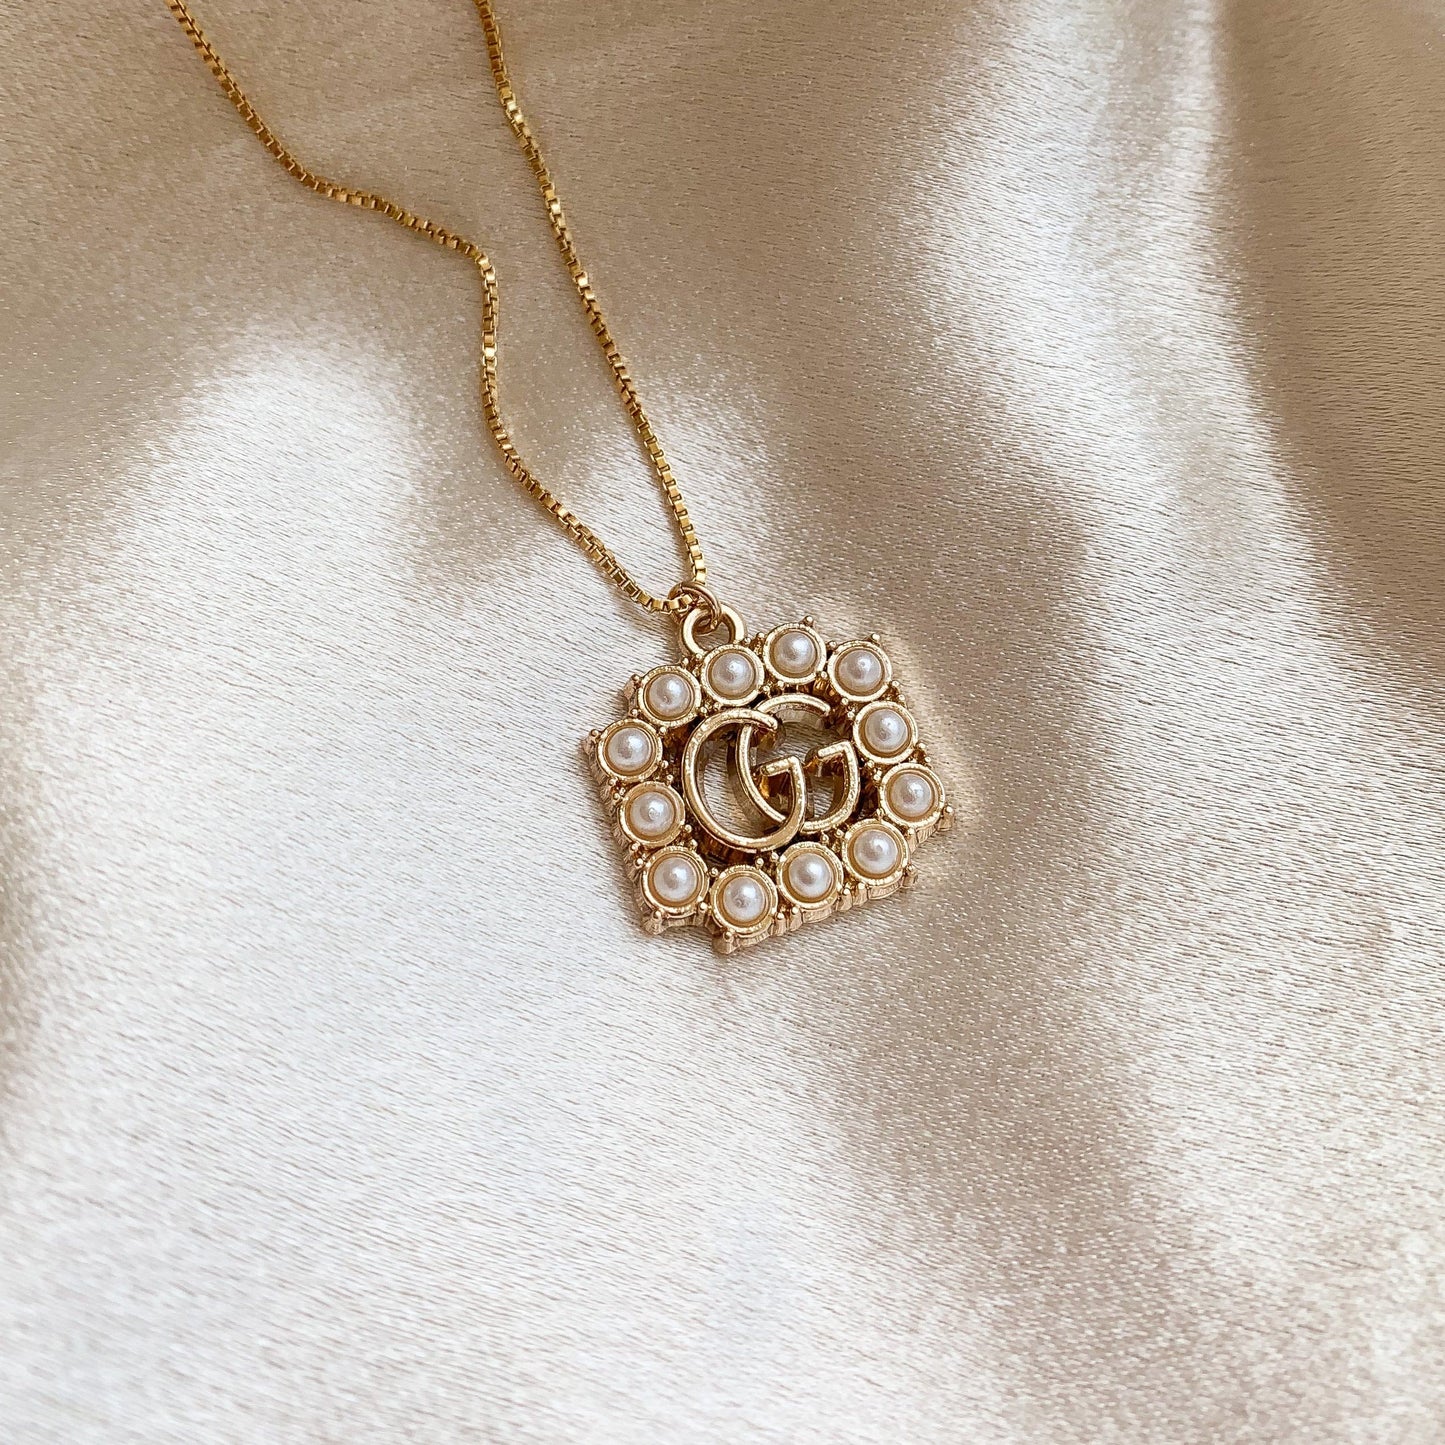 Repurposed GG Pearl Necklace